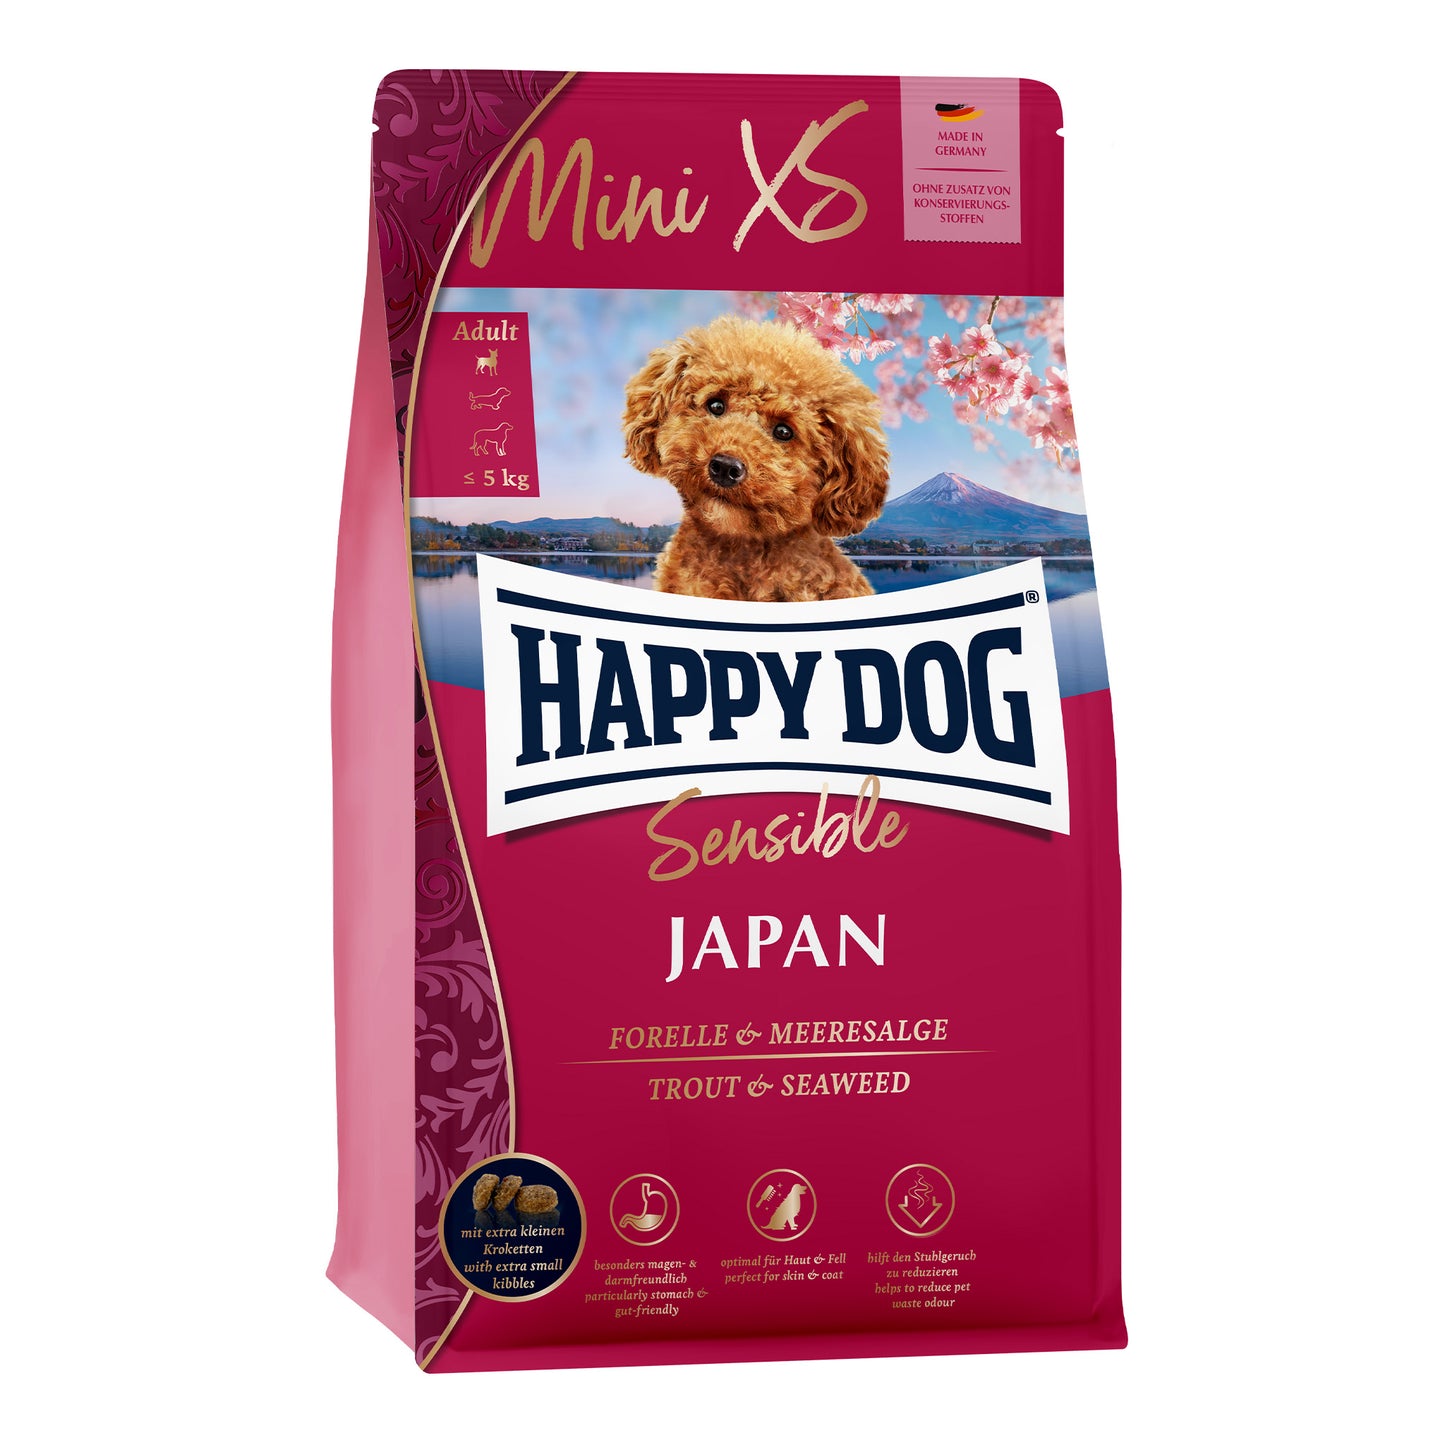 Mini XS Japan - Dry Food